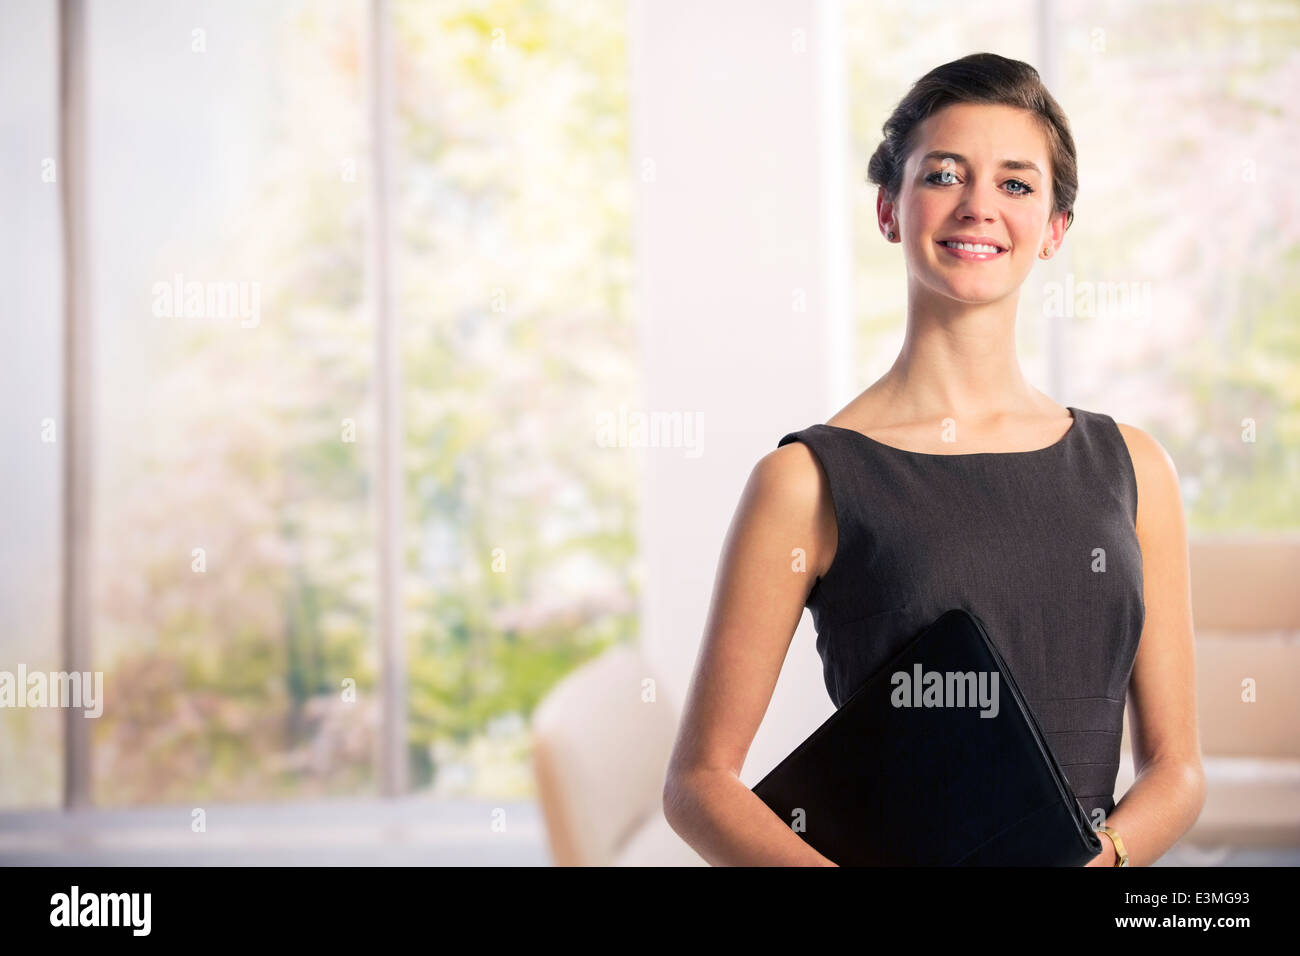 Portrait of smiling businesswoman Stock Photo